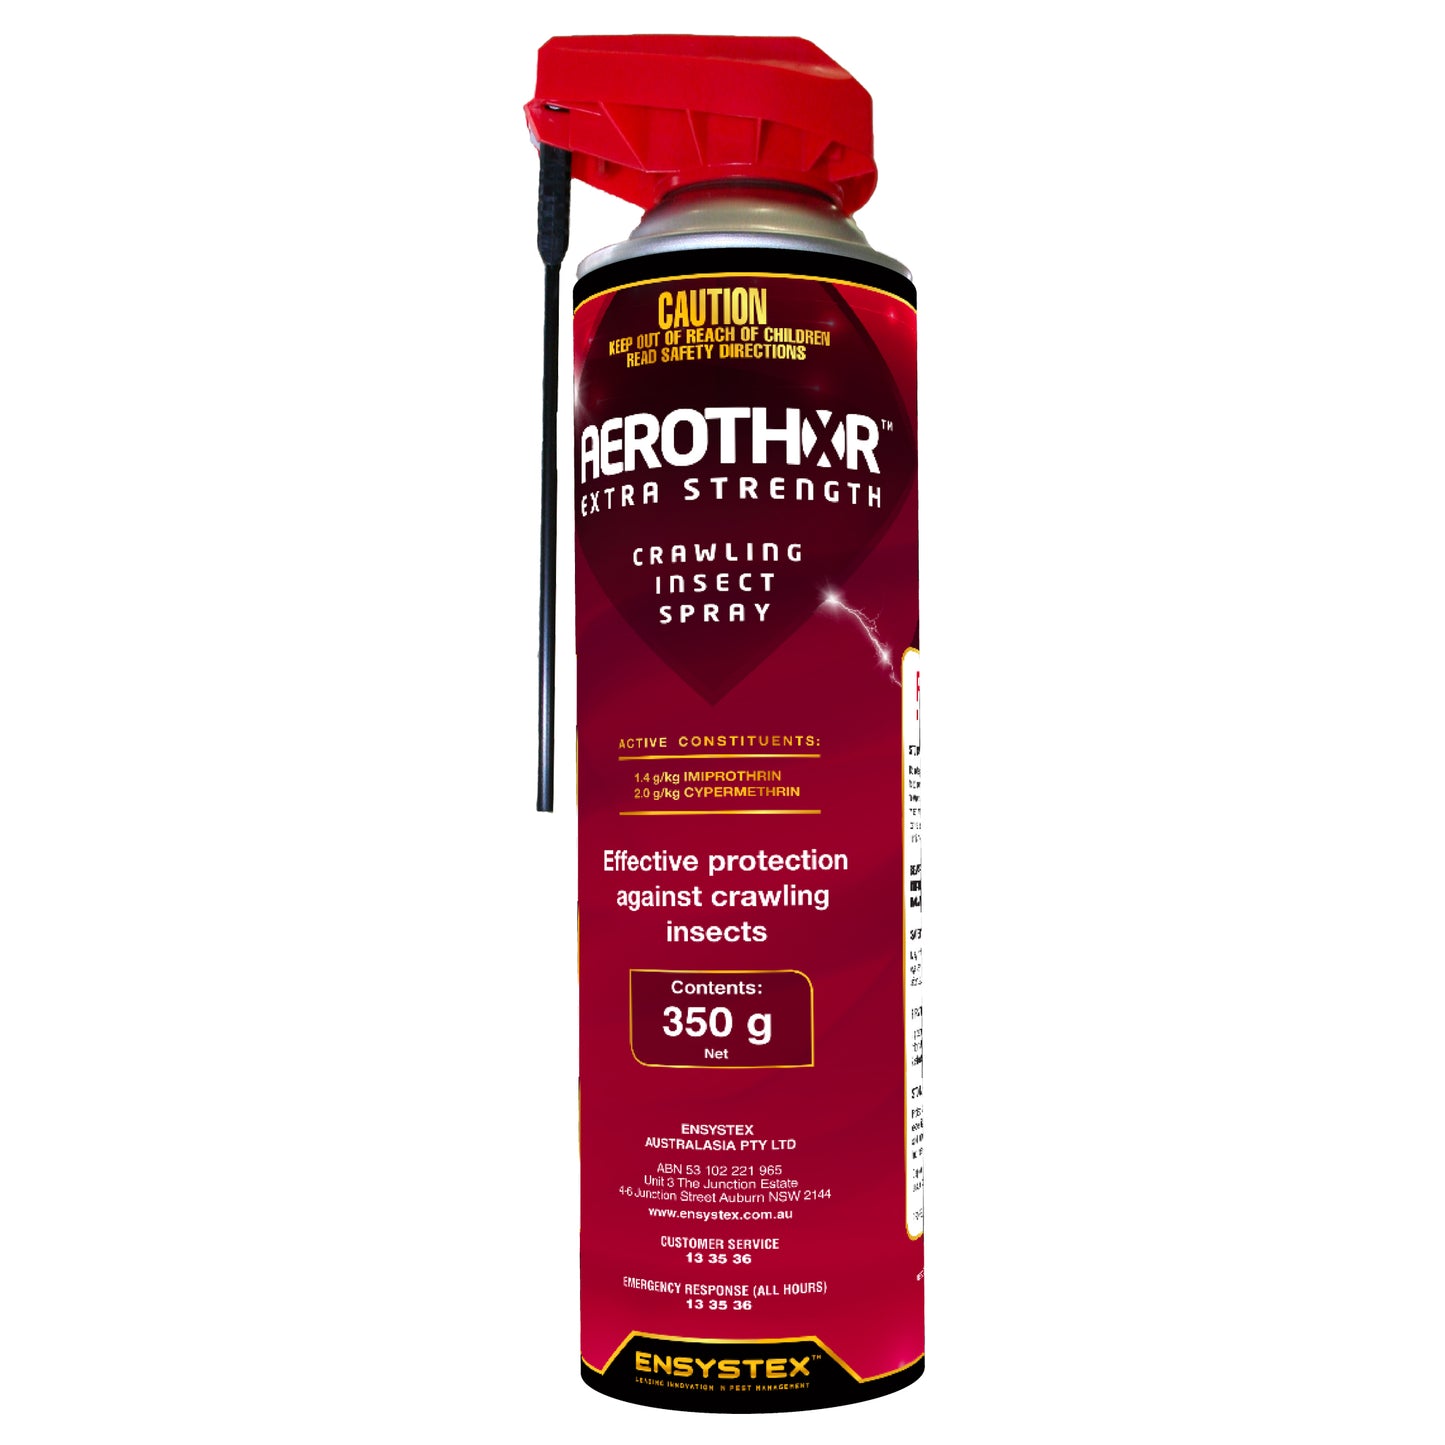 AEROTHOR™ Extra Strength Crawling Insect Spray